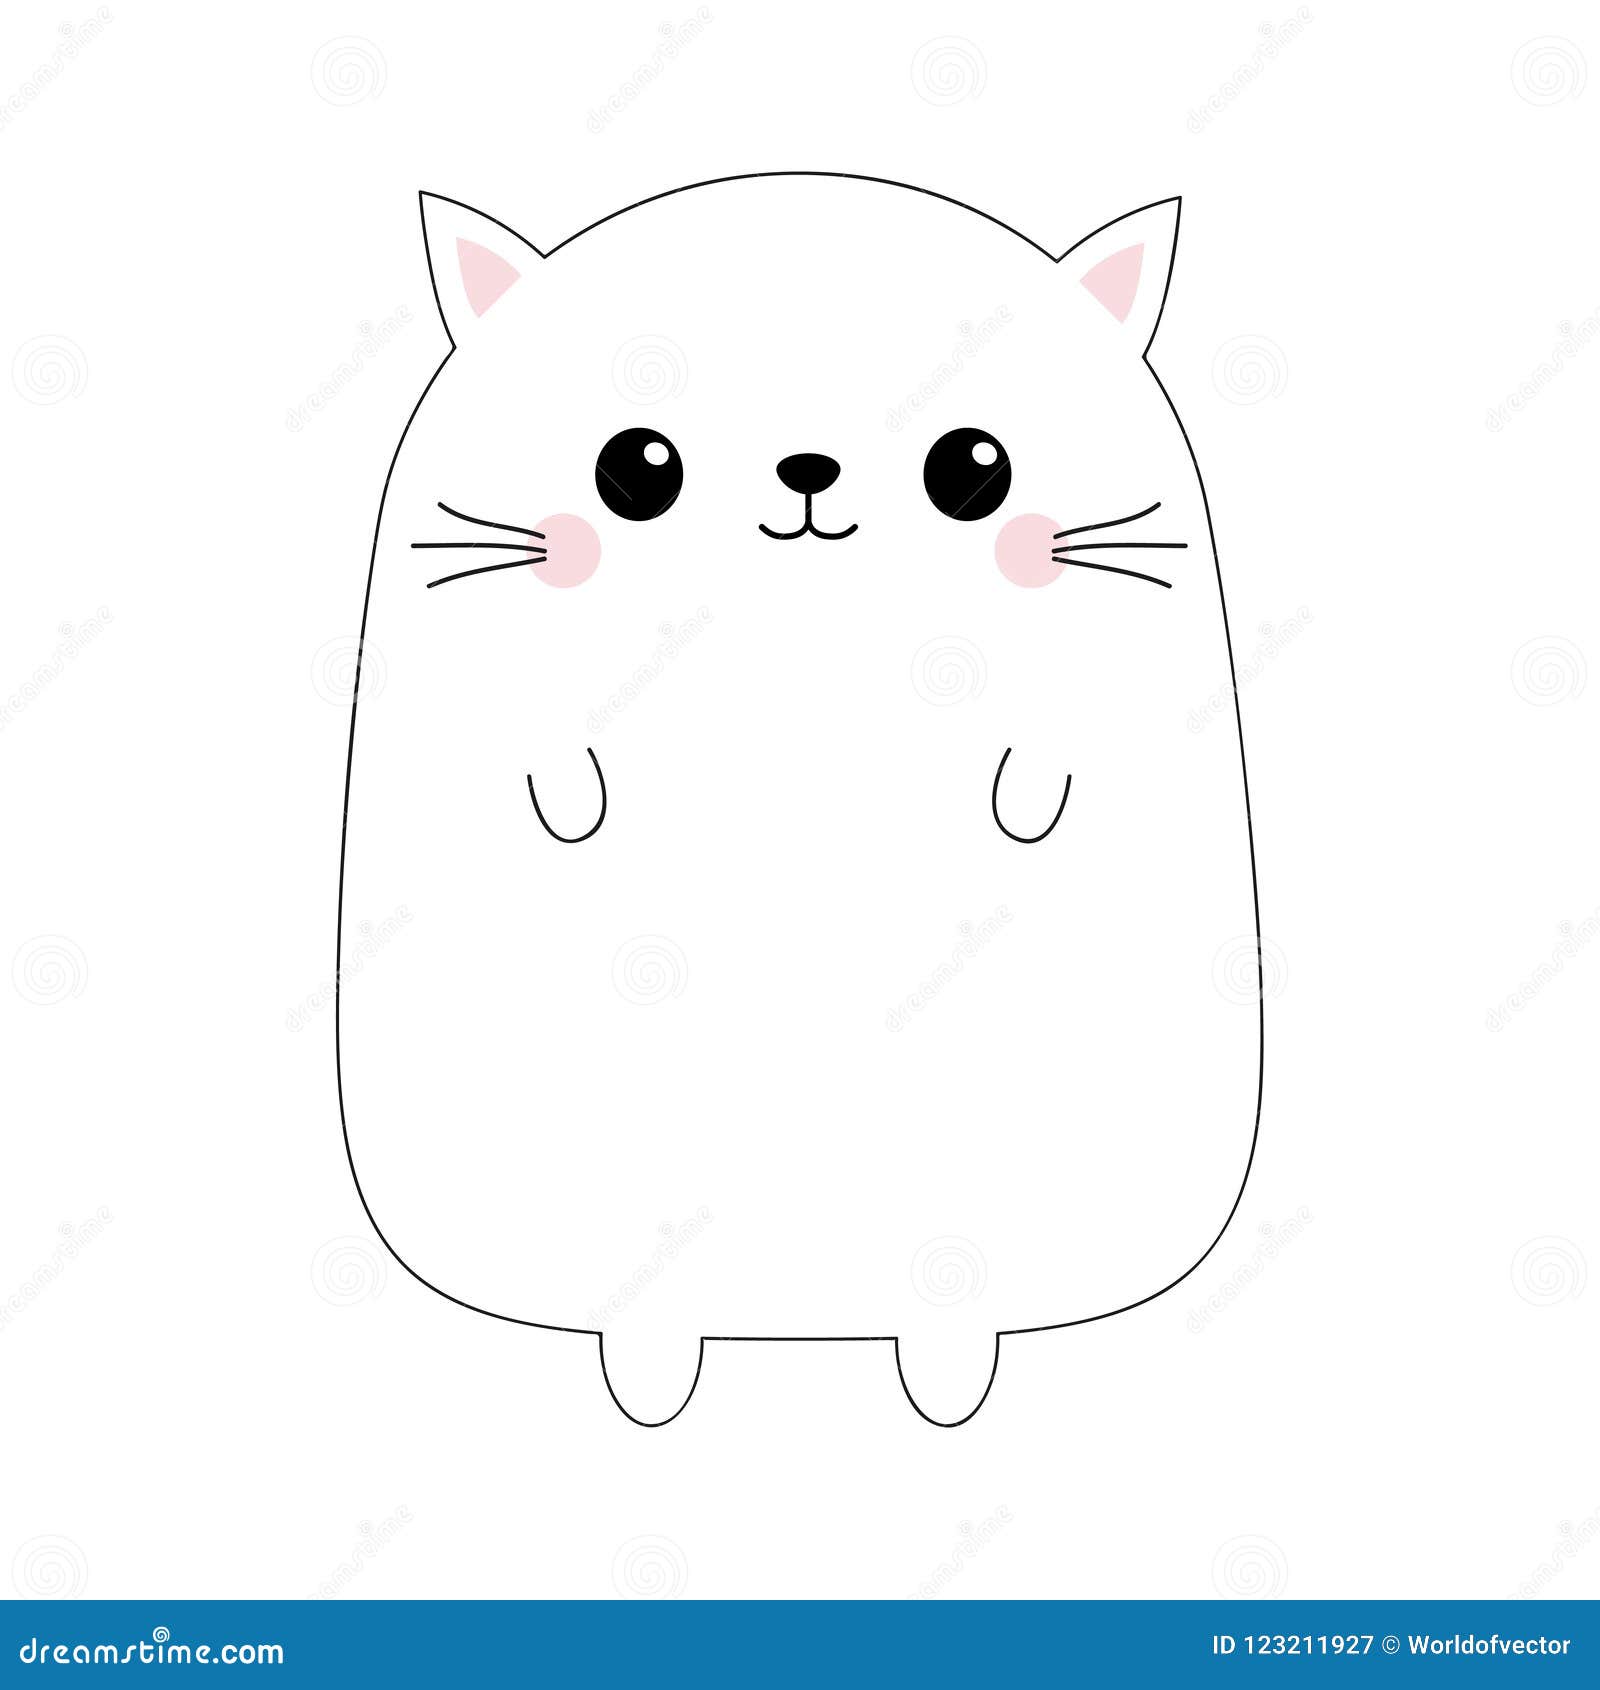 Cute Cat Icon. Gray Kitten Face Head Silhouette. Funny Kawaii